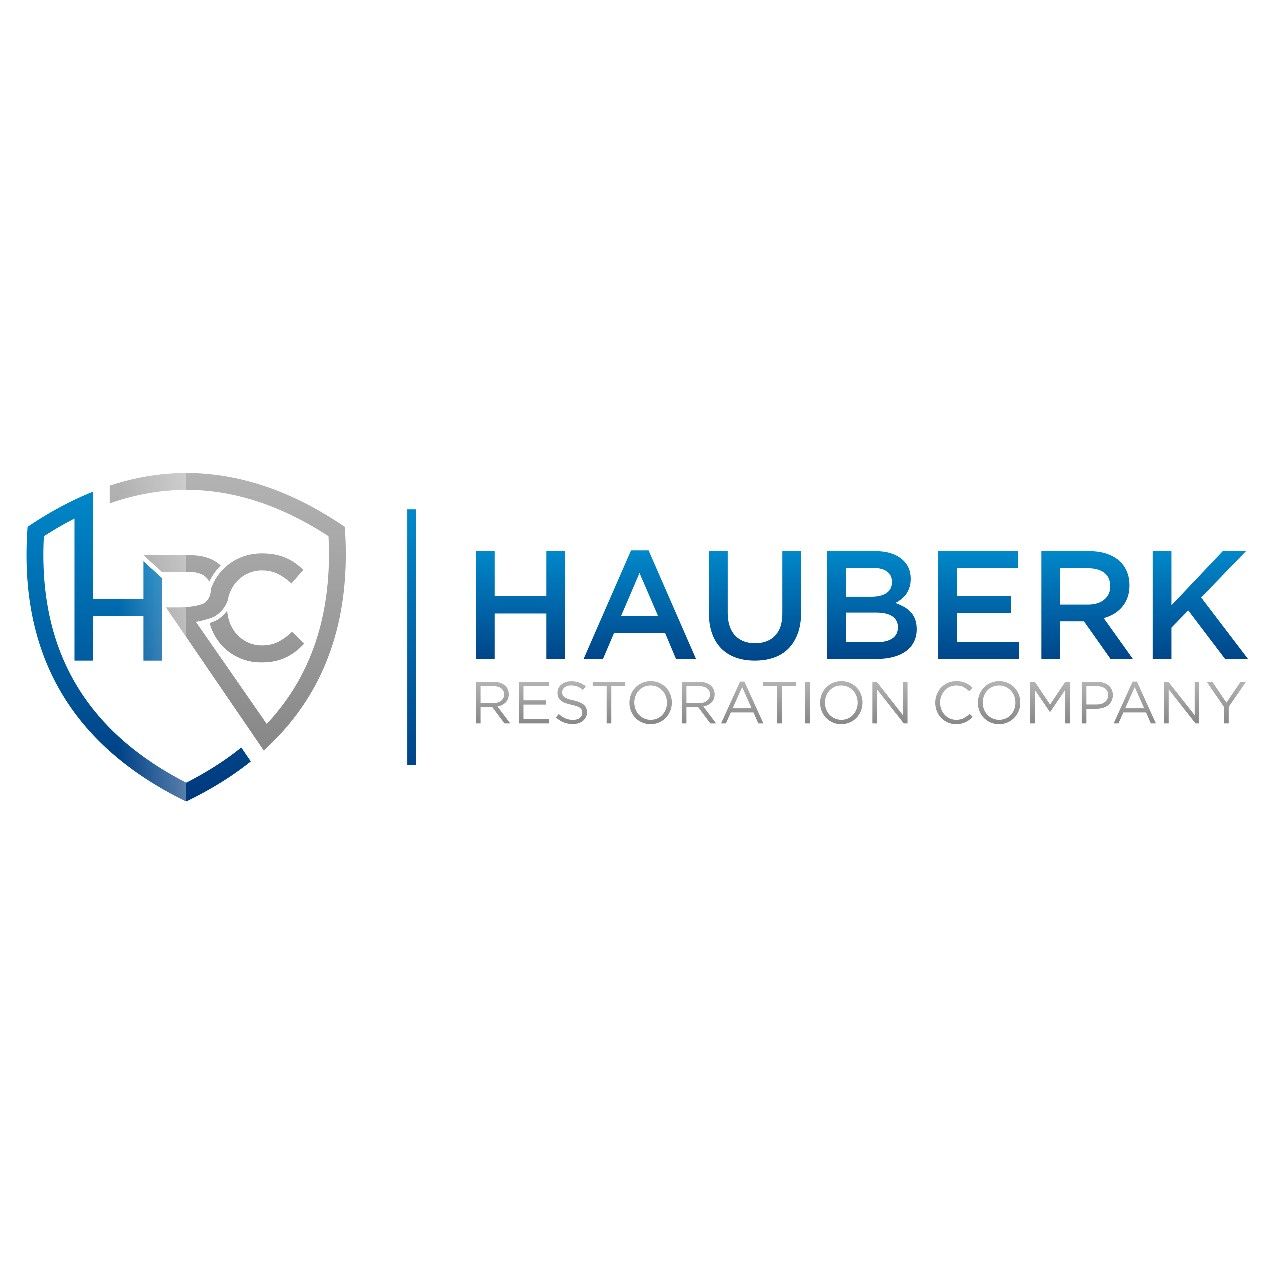 Hauberk Restoration Company